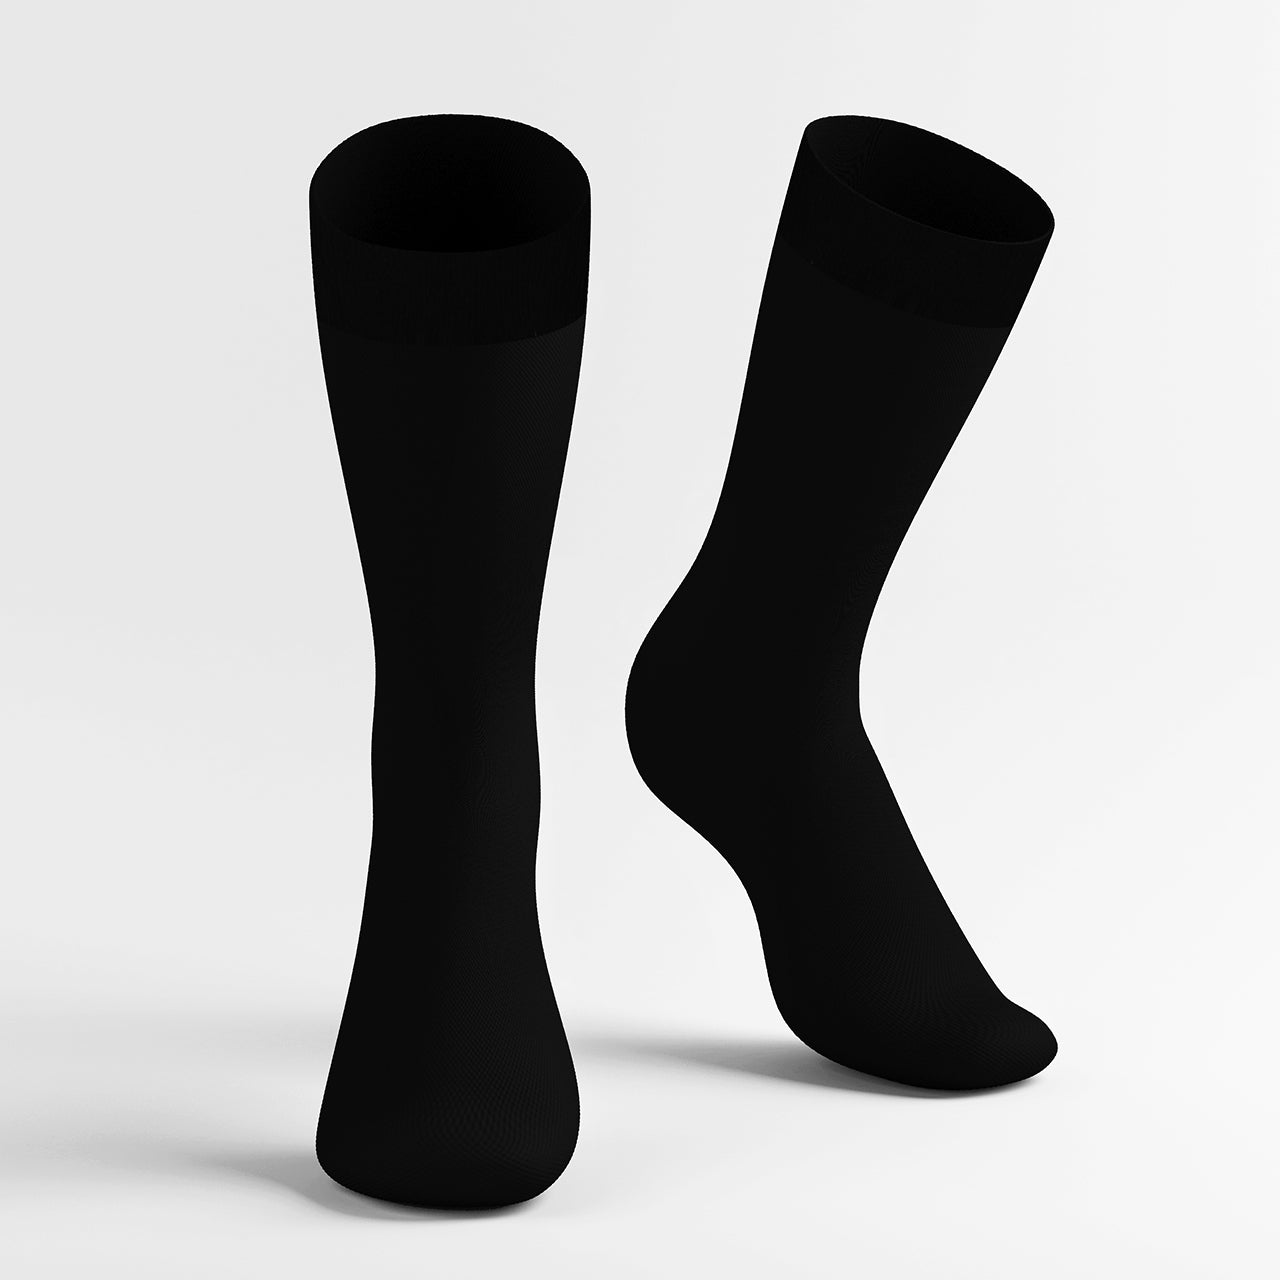 Knee compression socks